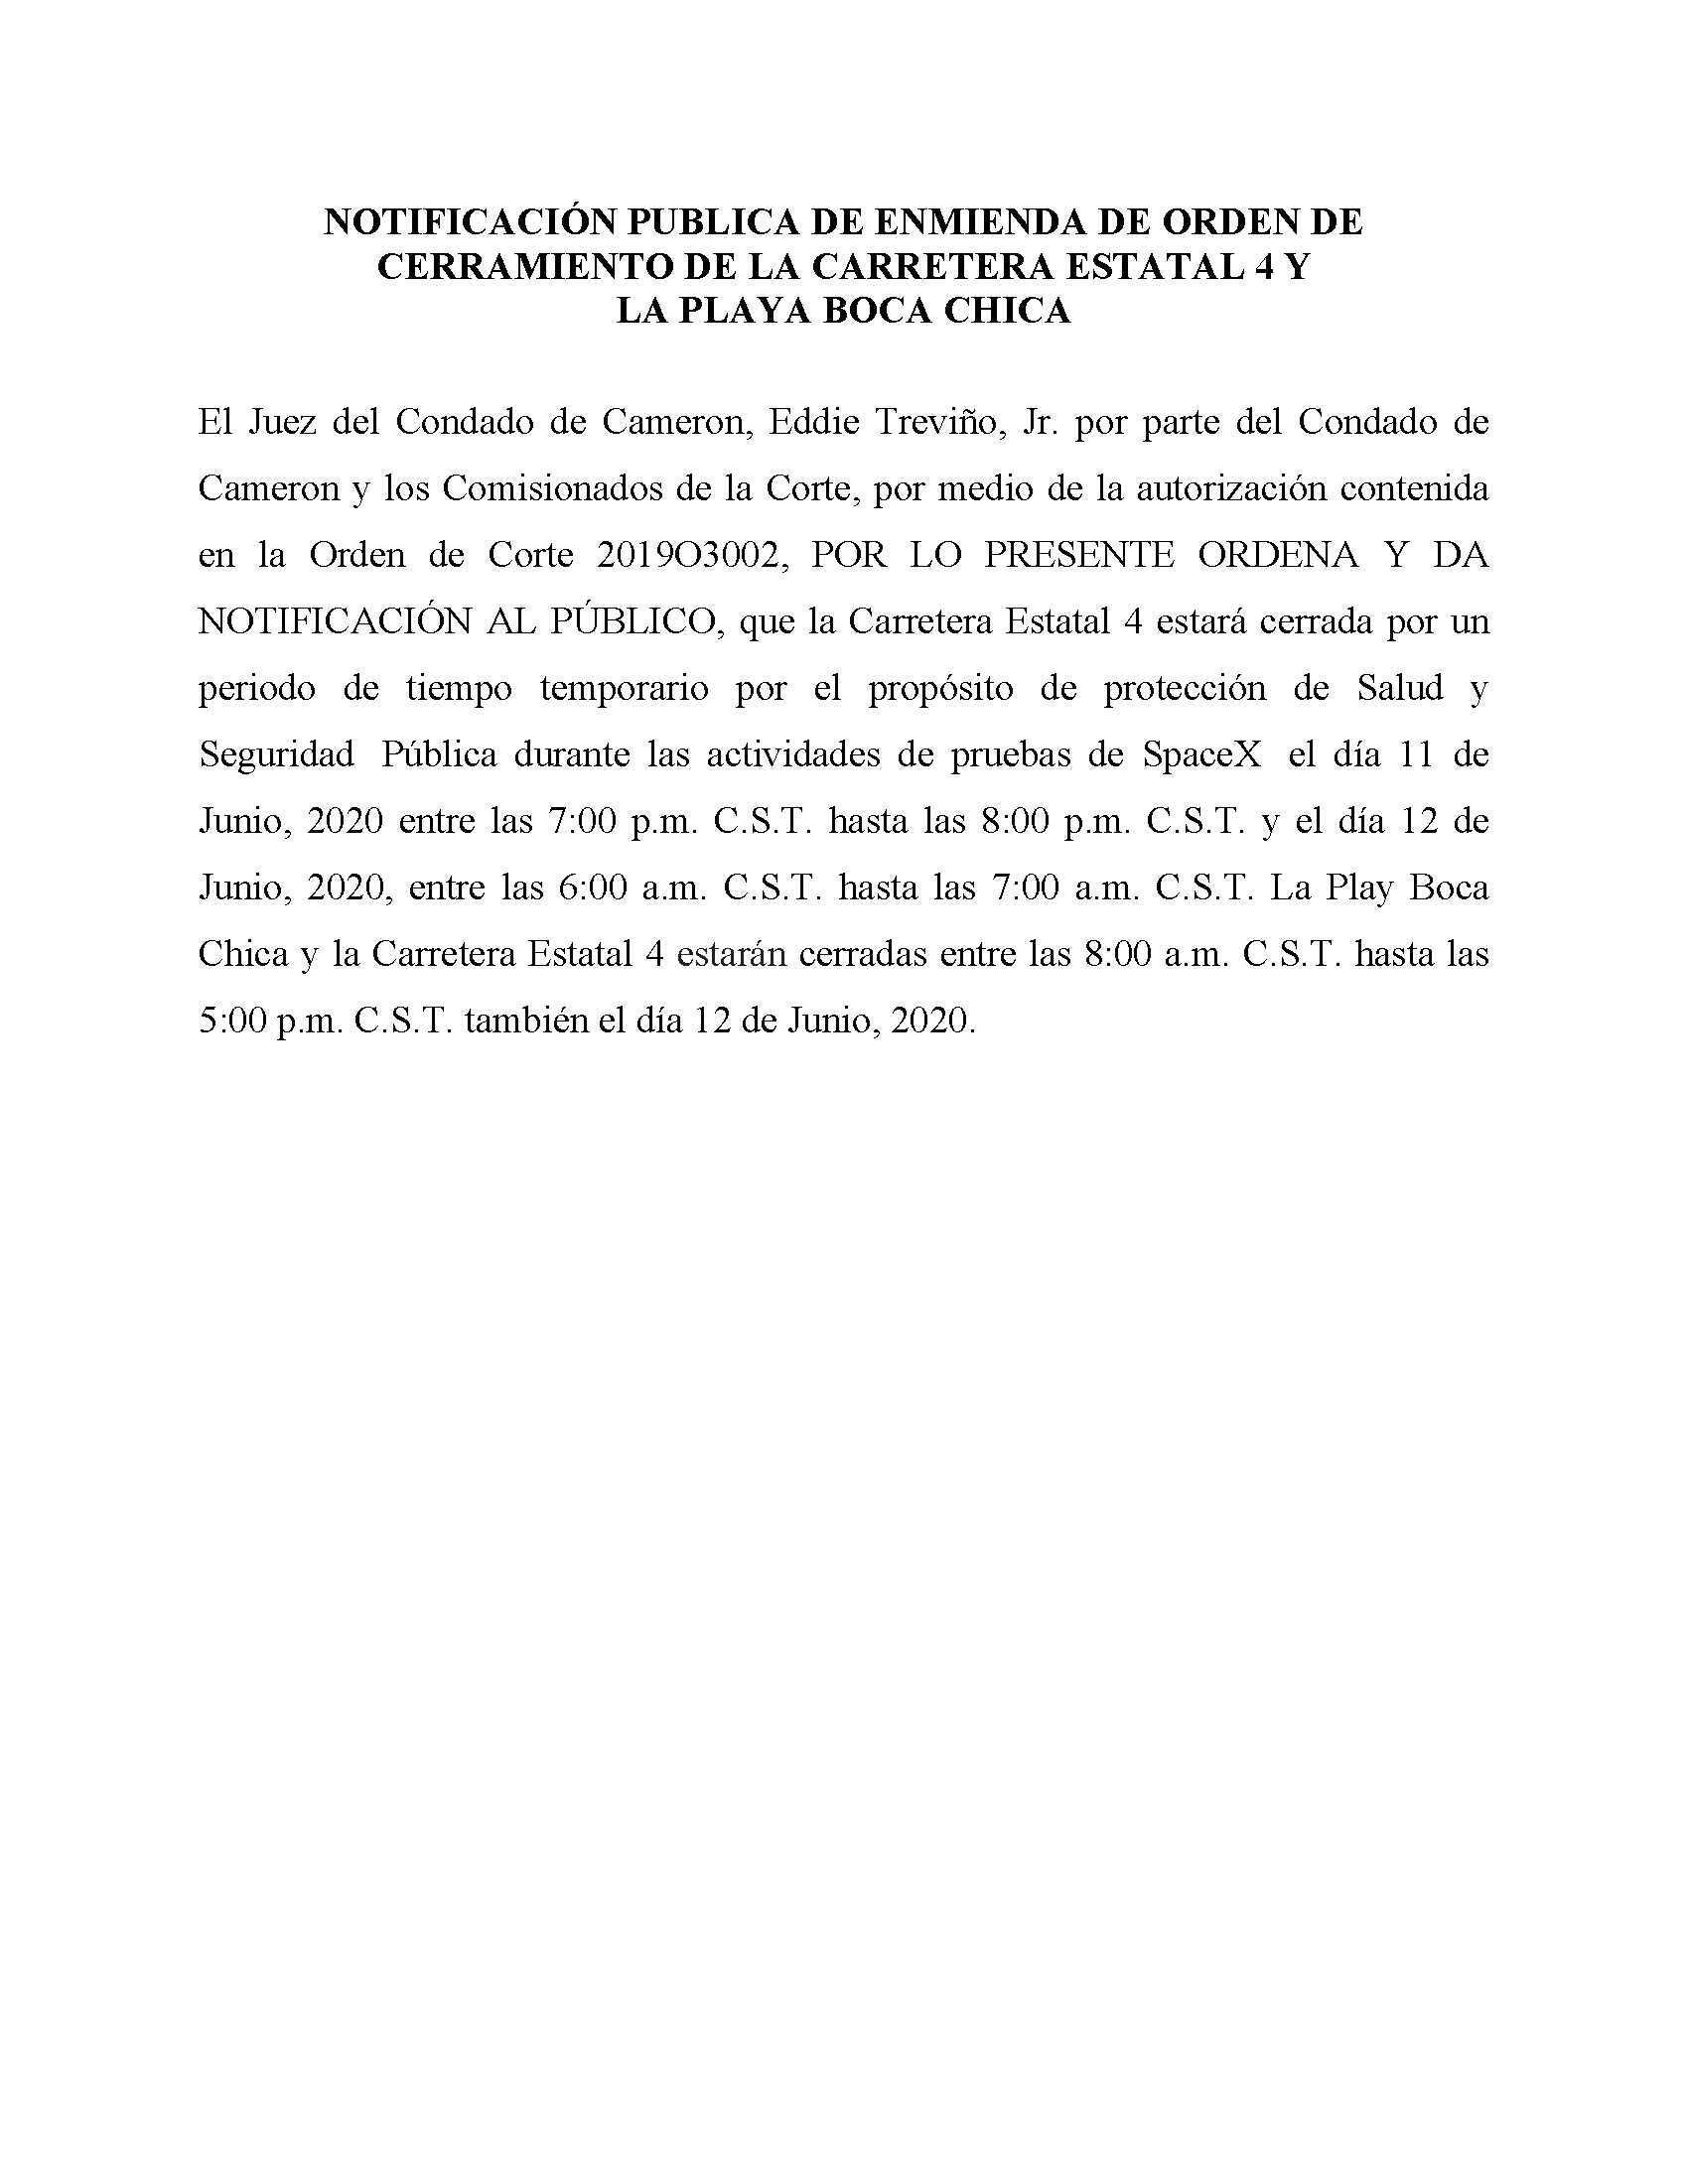 AMENDMENT TO ORDER.CLOSURE OF HIGHWAY 4 Y LA PLAYA BOCA CHICA.SPANISH.06.10.20